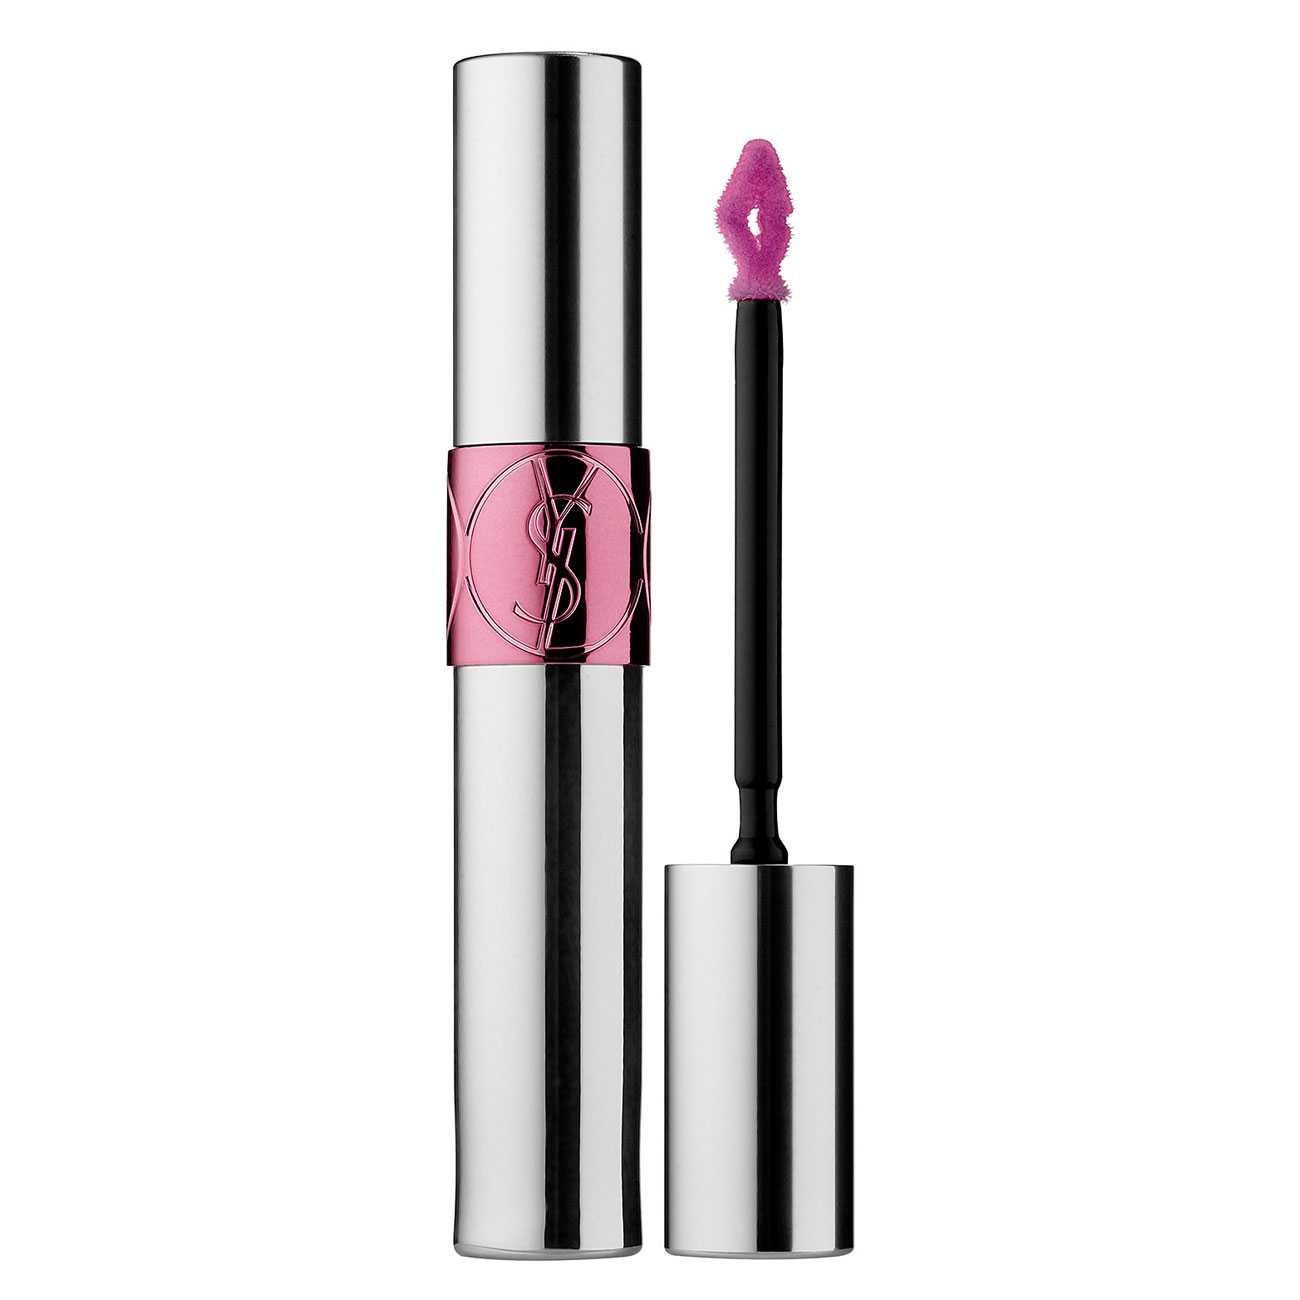 VOLUPTE LIP TINT IN OIL 6 G Pink About Me N 8 Yves Saint Laurent bestvalue.eu